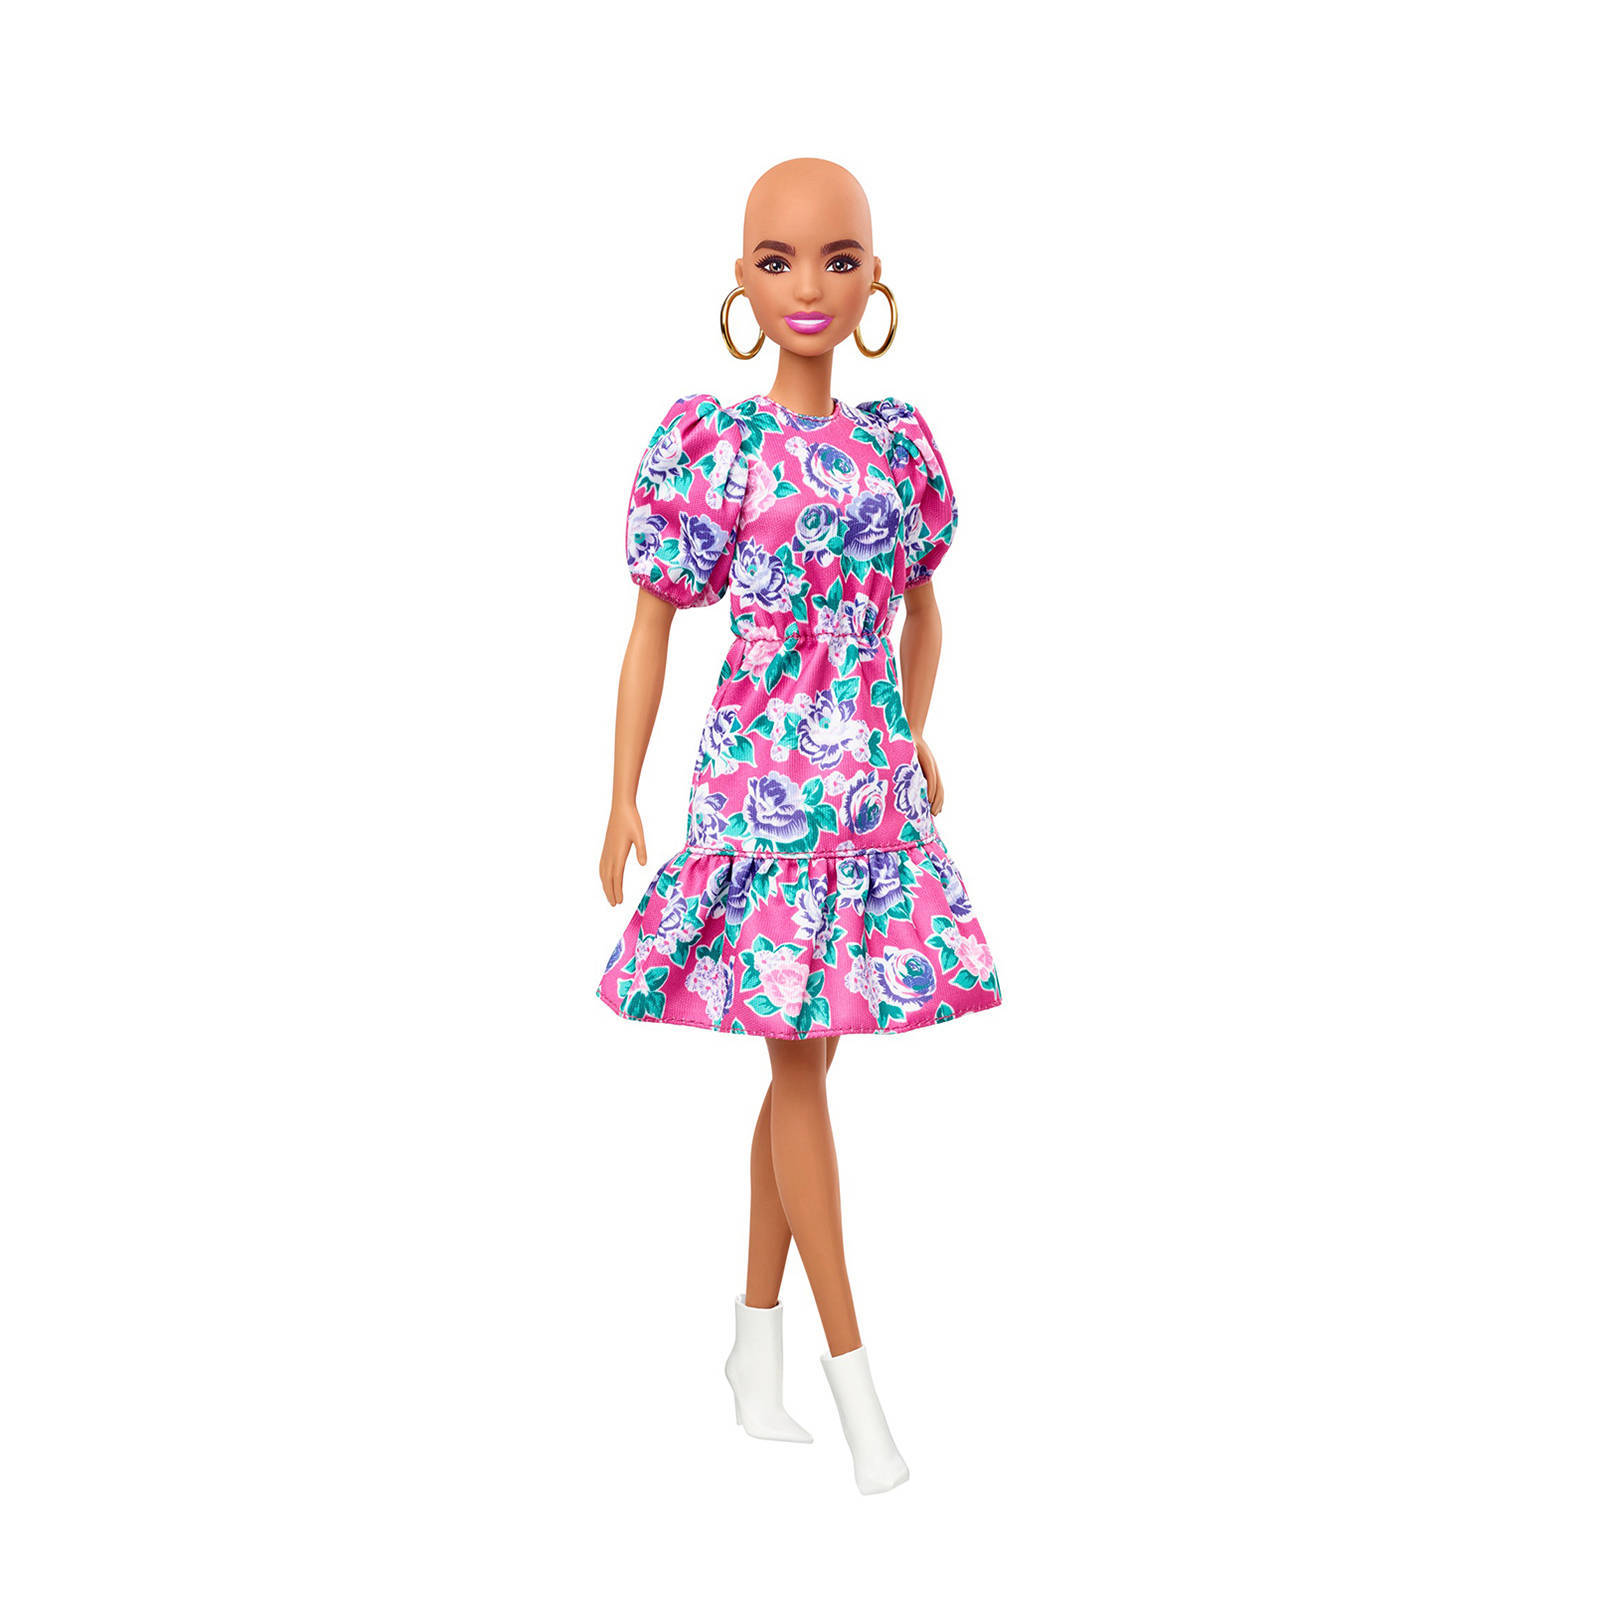 Barbie Tienerpop Fashionistas No Hair Meisjes 30 Cm Roze online kopen